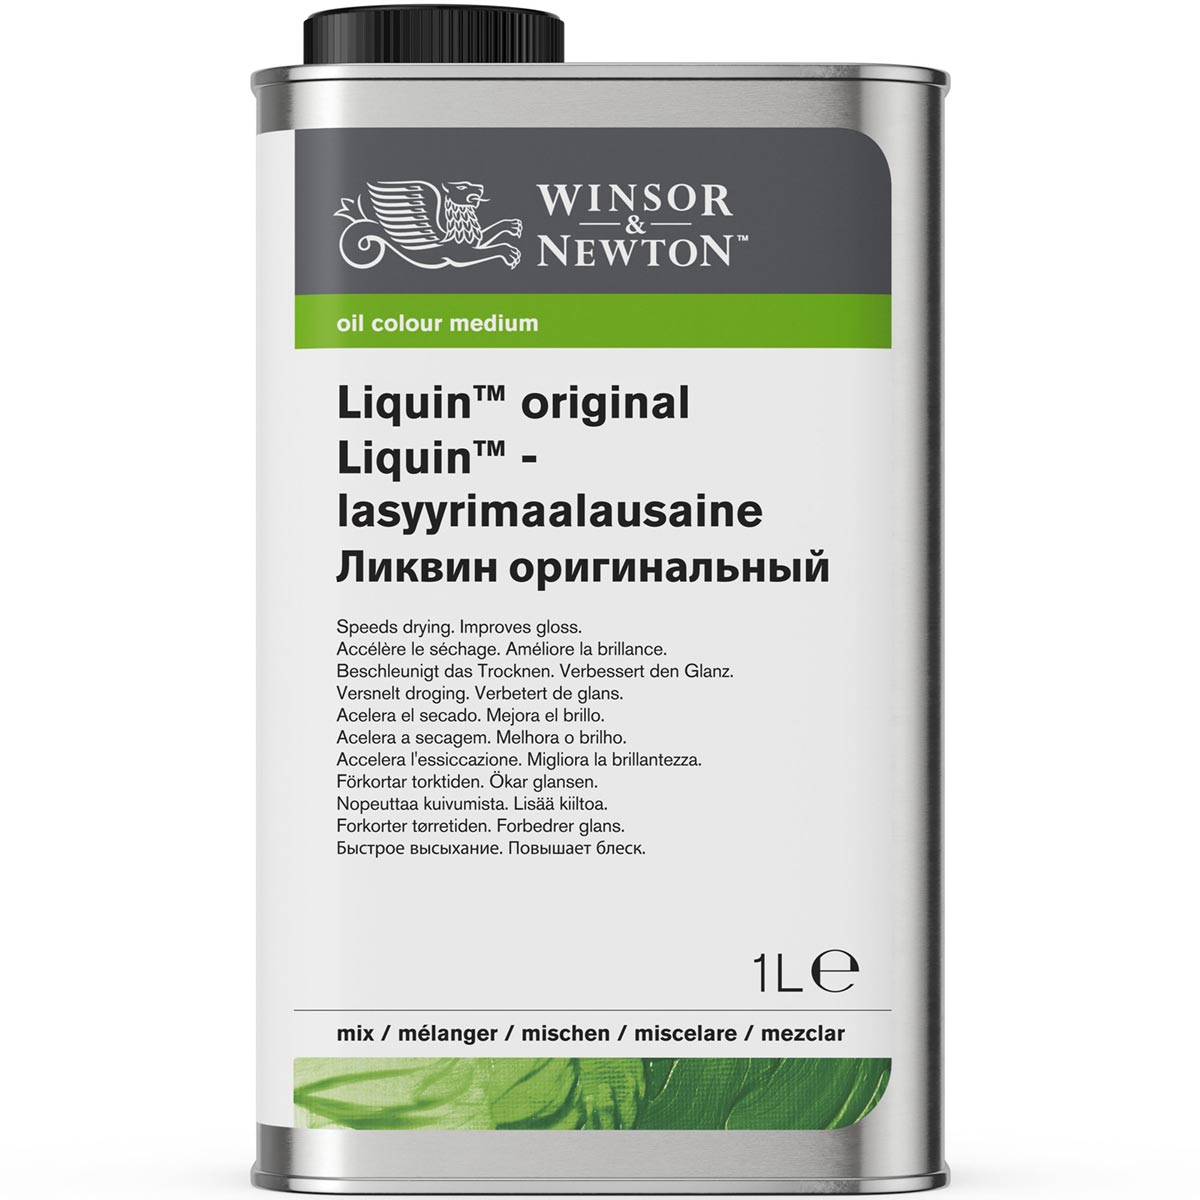 Winsor en Newton - Liquin Original - 1 liter